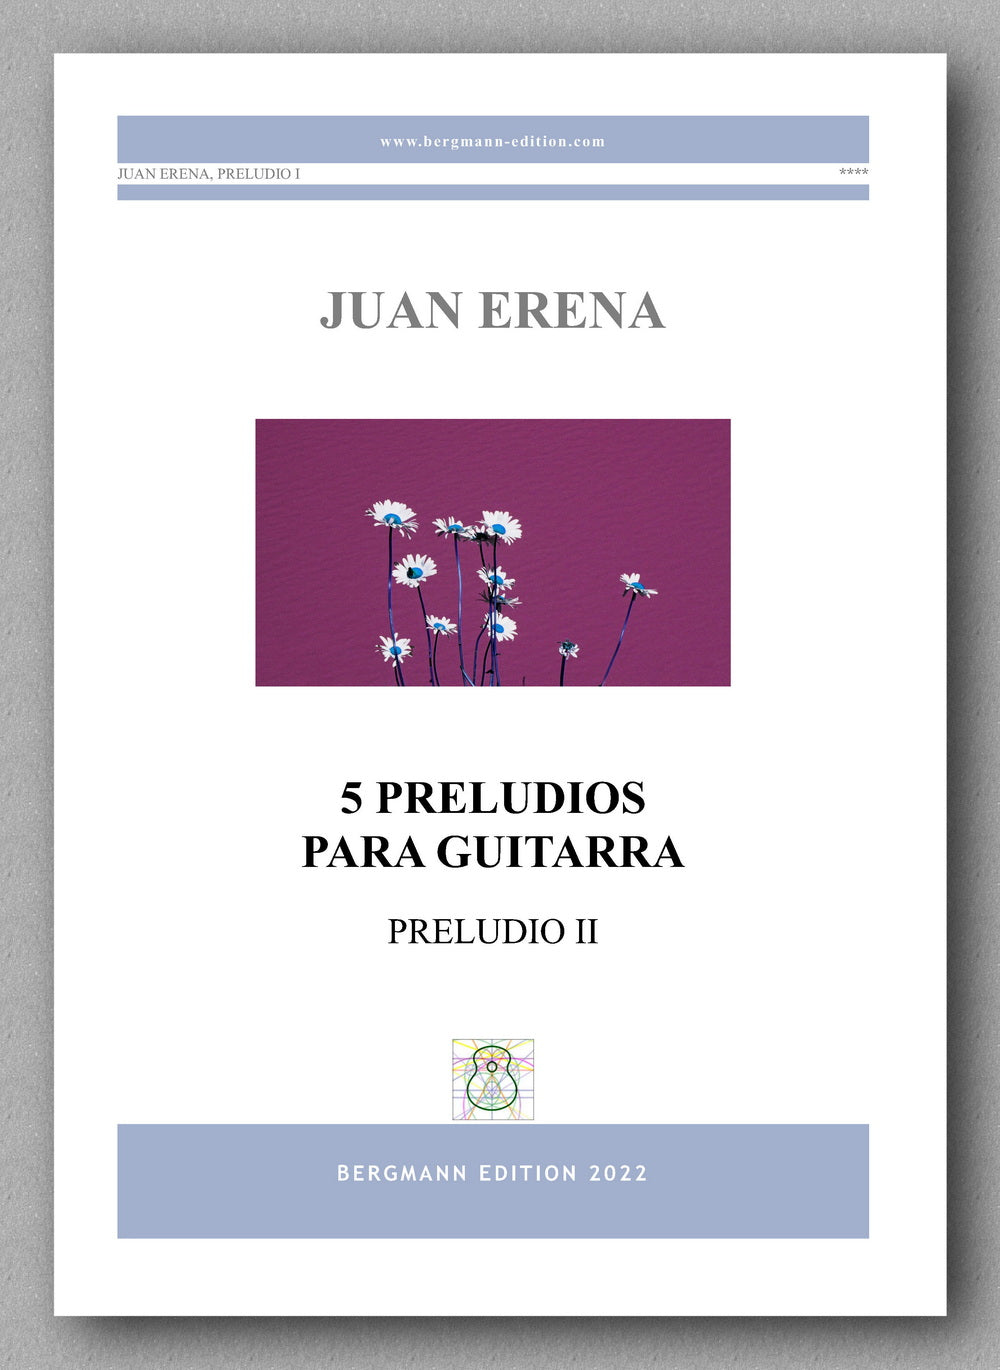 Juan Erena, PRELUDIO II - preview of the cover